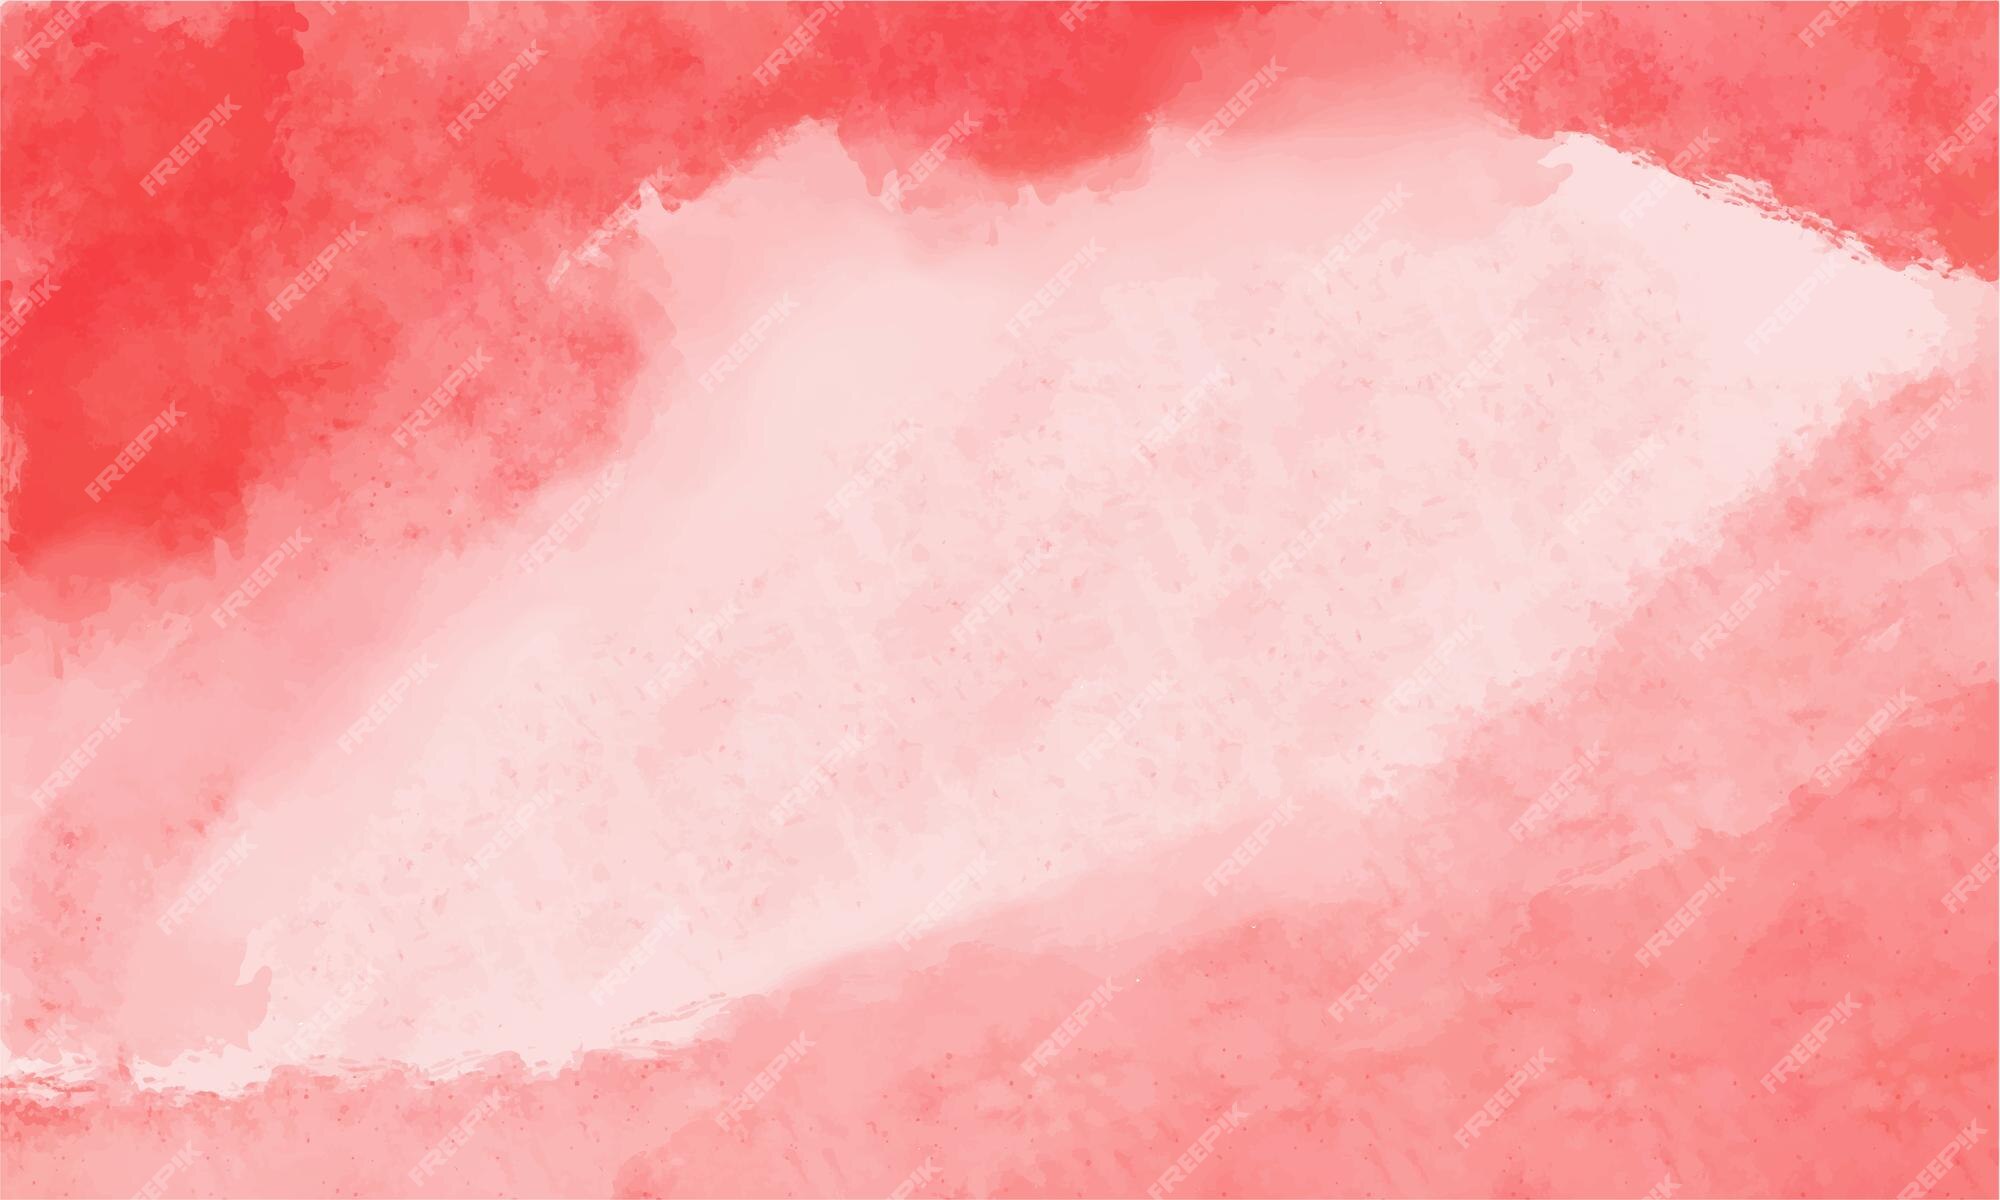 Pastel red backgrounds Vectors & Illustrations for Free Download | Freepik